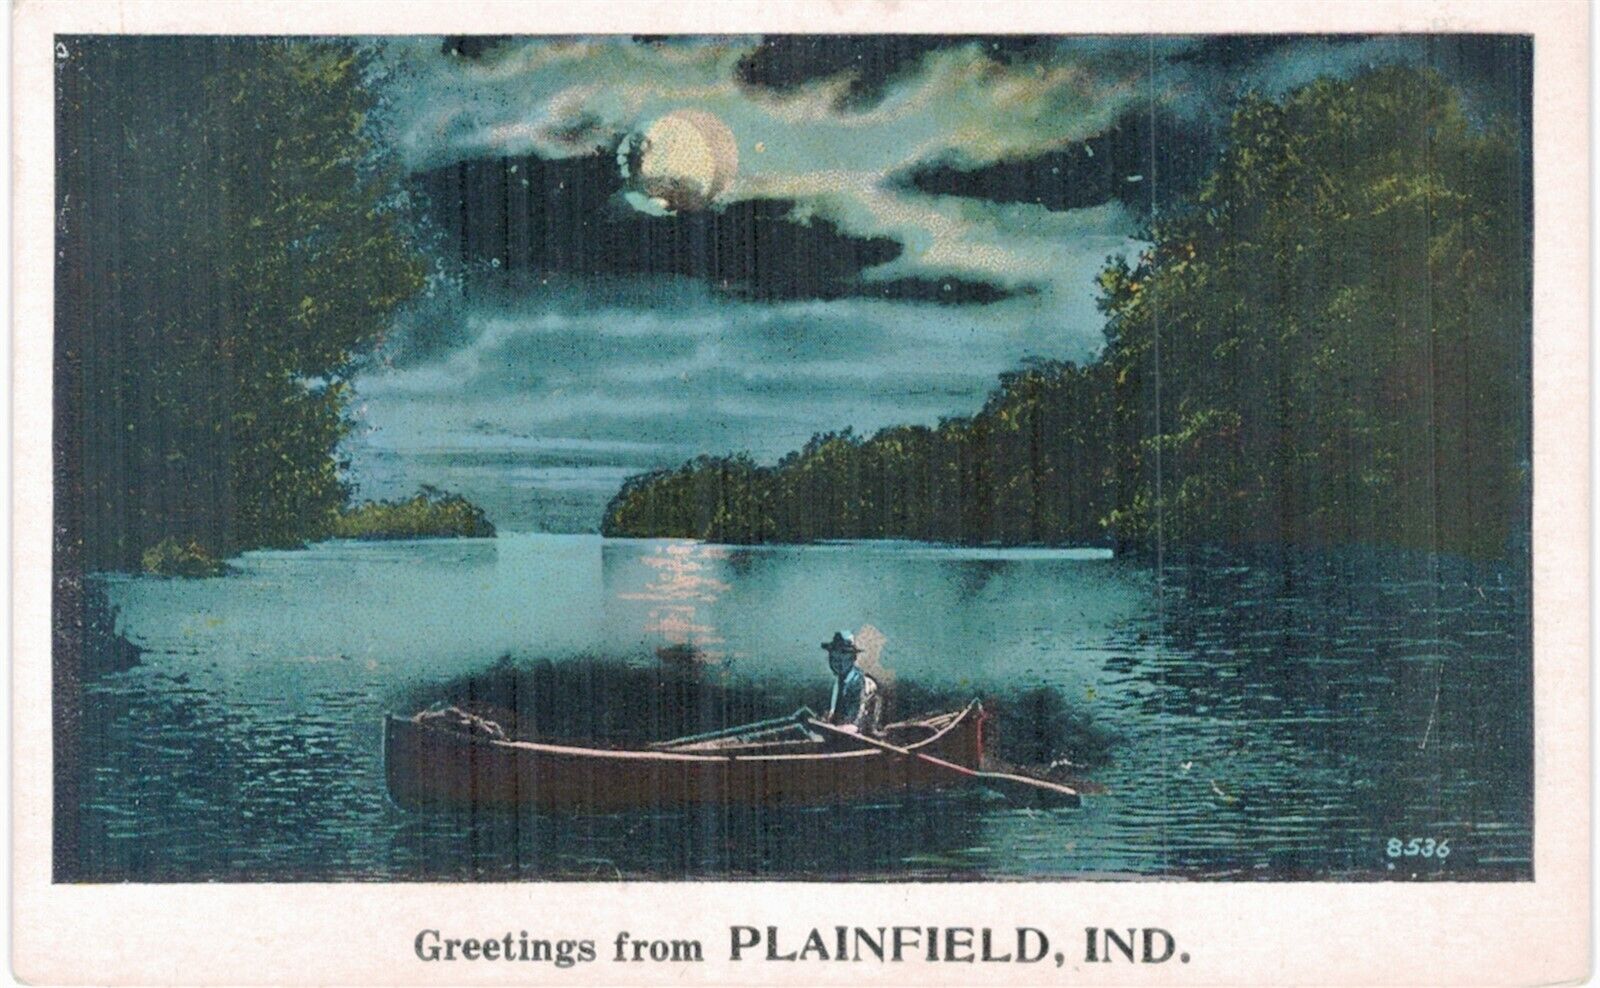 Plainfield Greetings Moonlight Night Fishing 1930 IN 